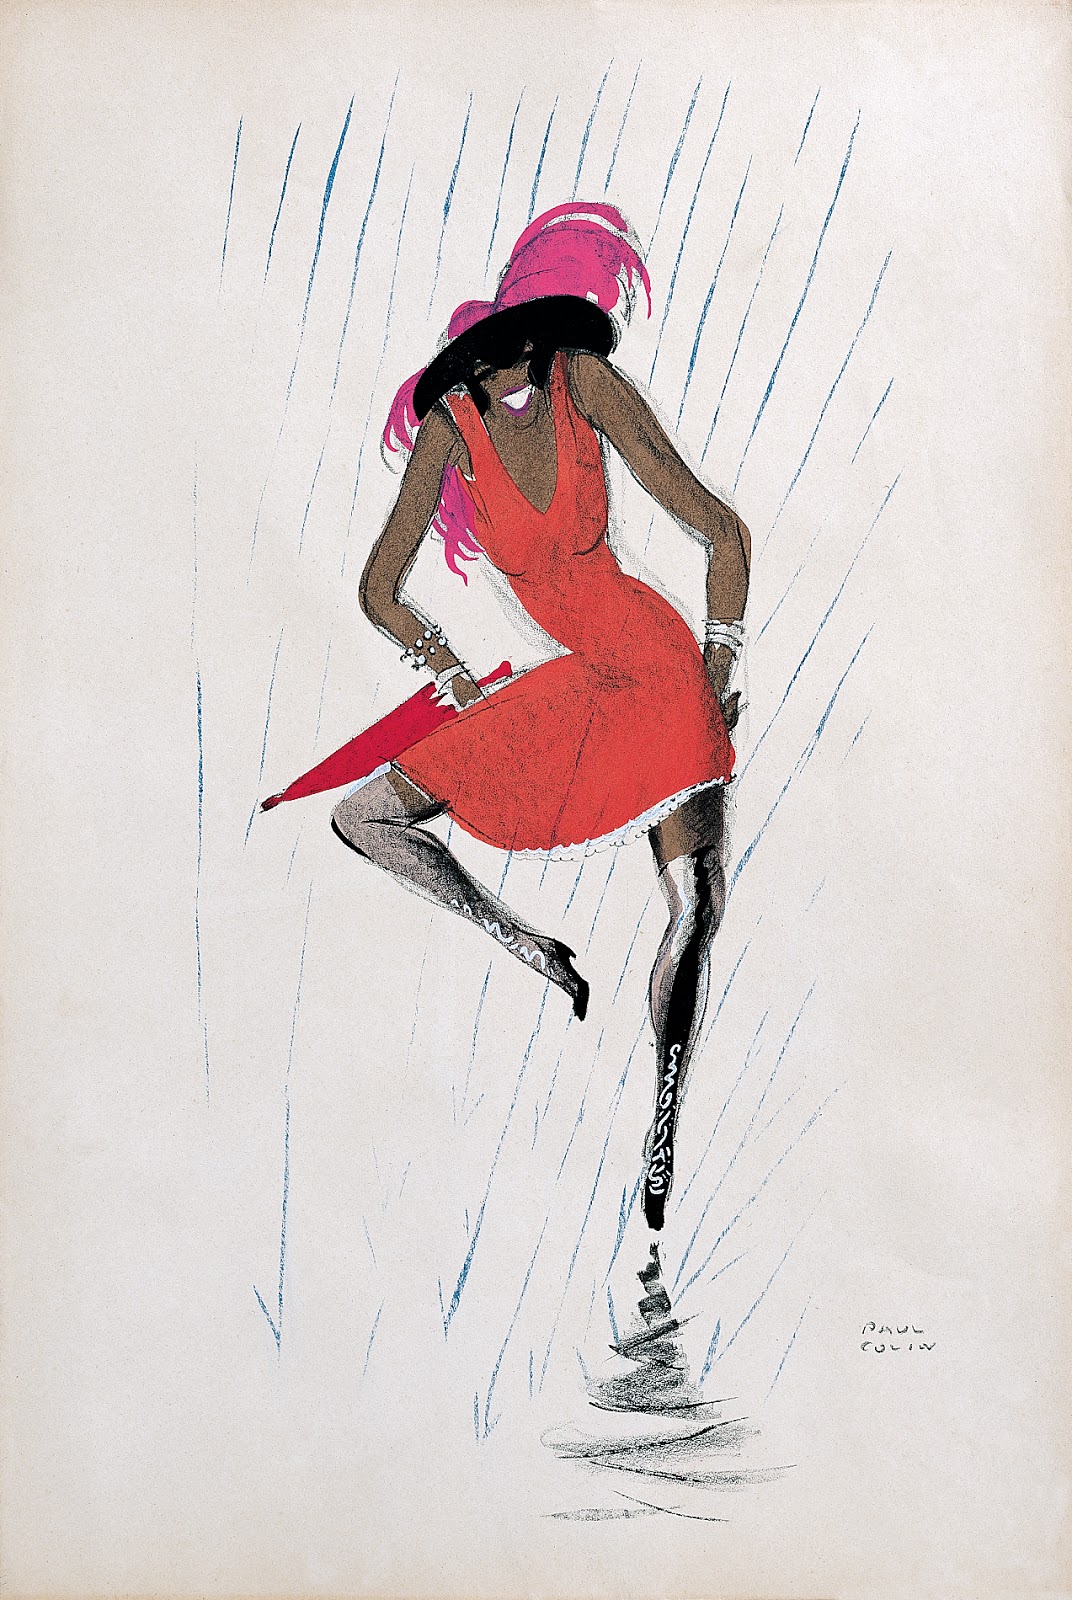 ©Paul Colin - Le Tumulte Noir, 1927. Ilustración | Illustration